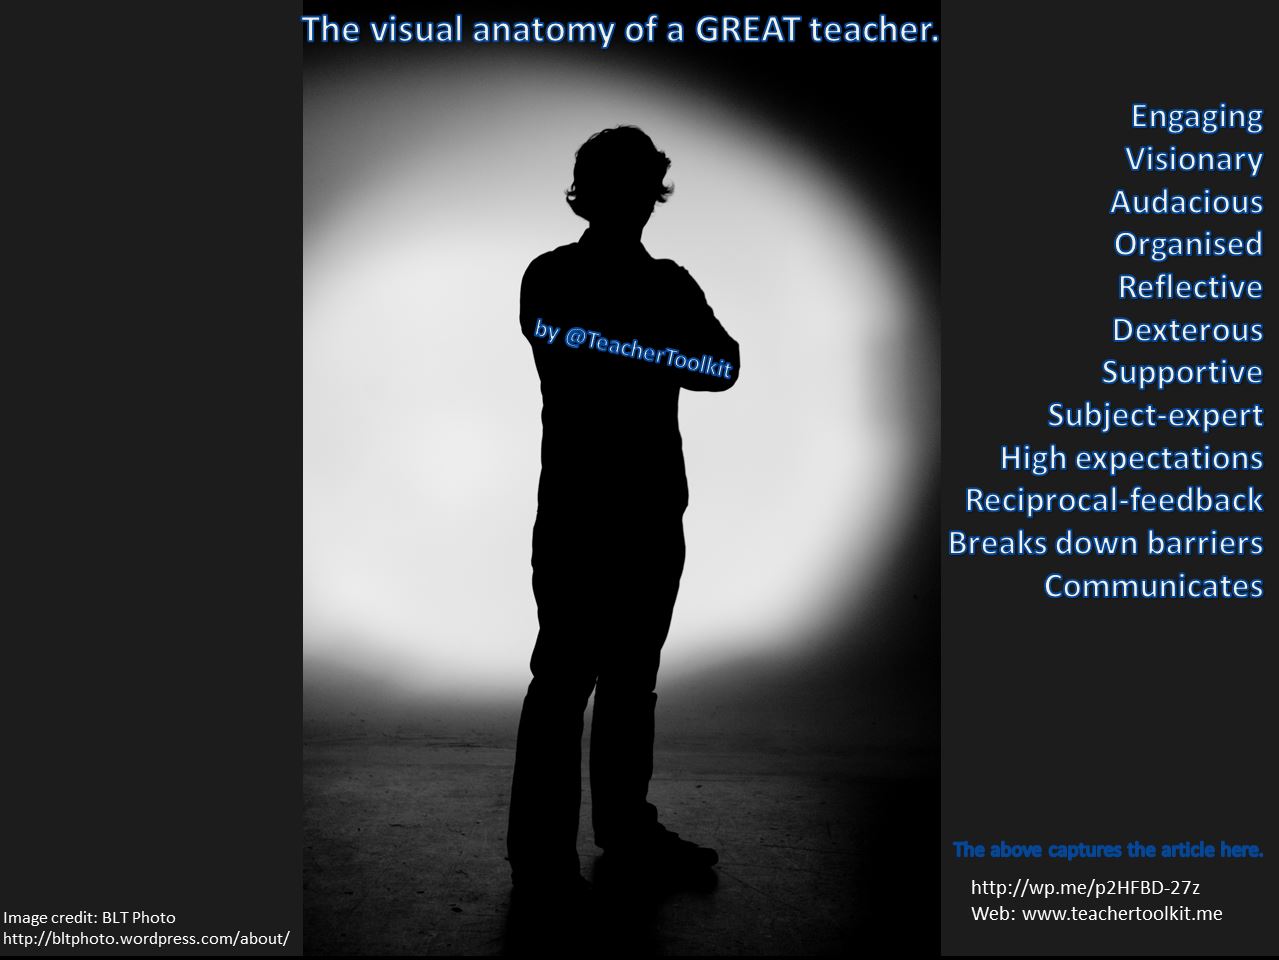 The visual anatomy of great teacher by @TeacherToolkit